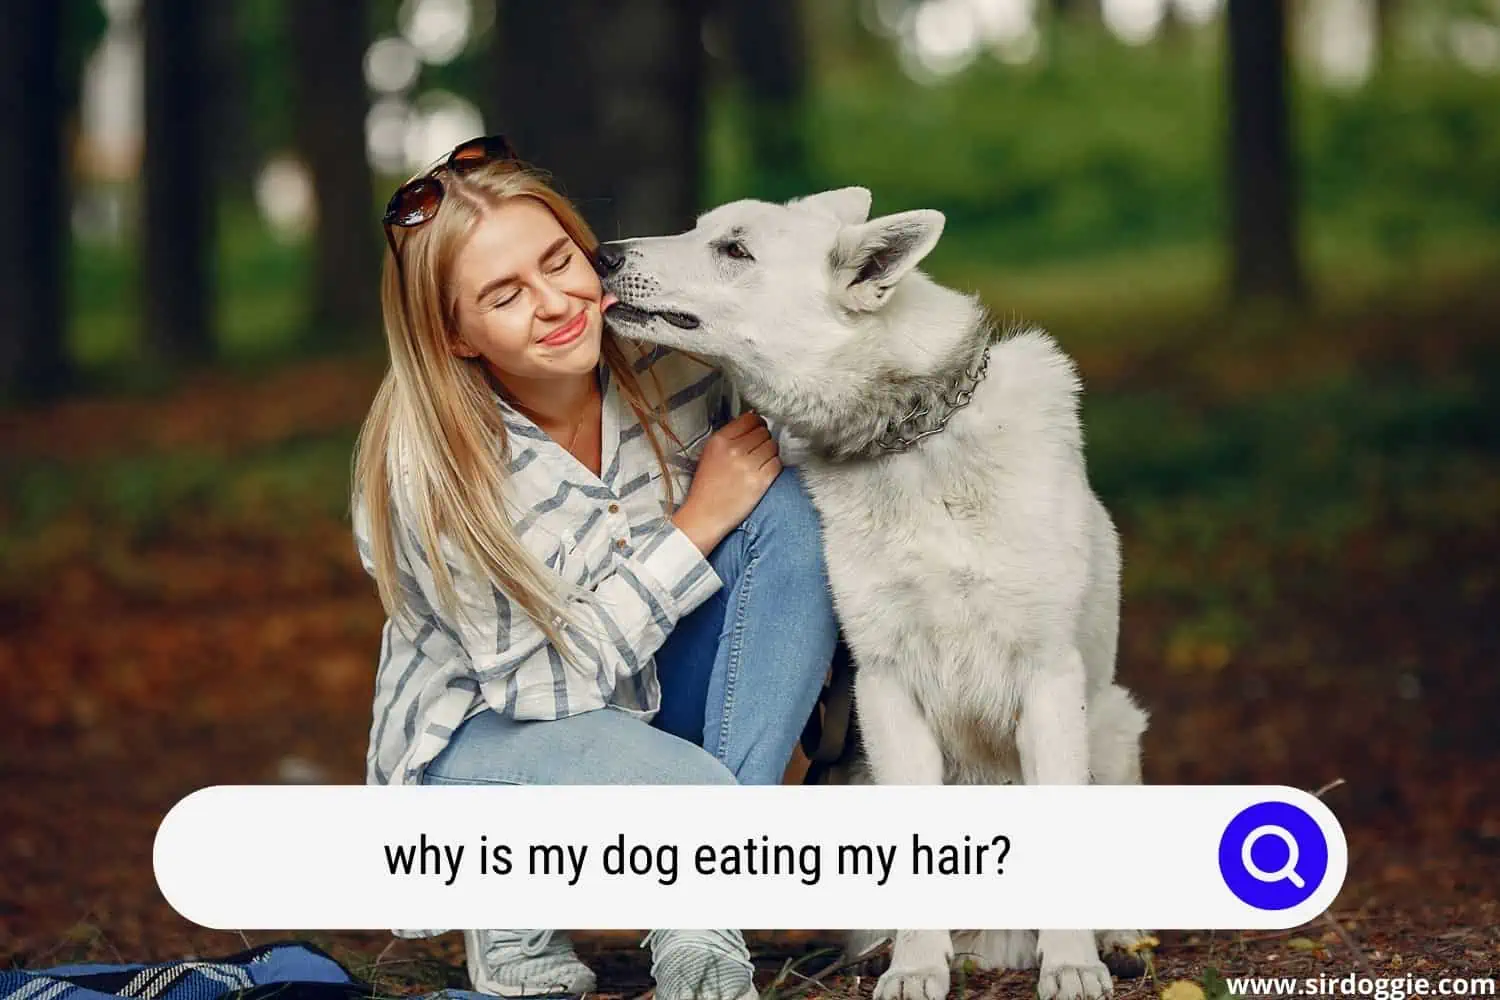 why dog eat my hair